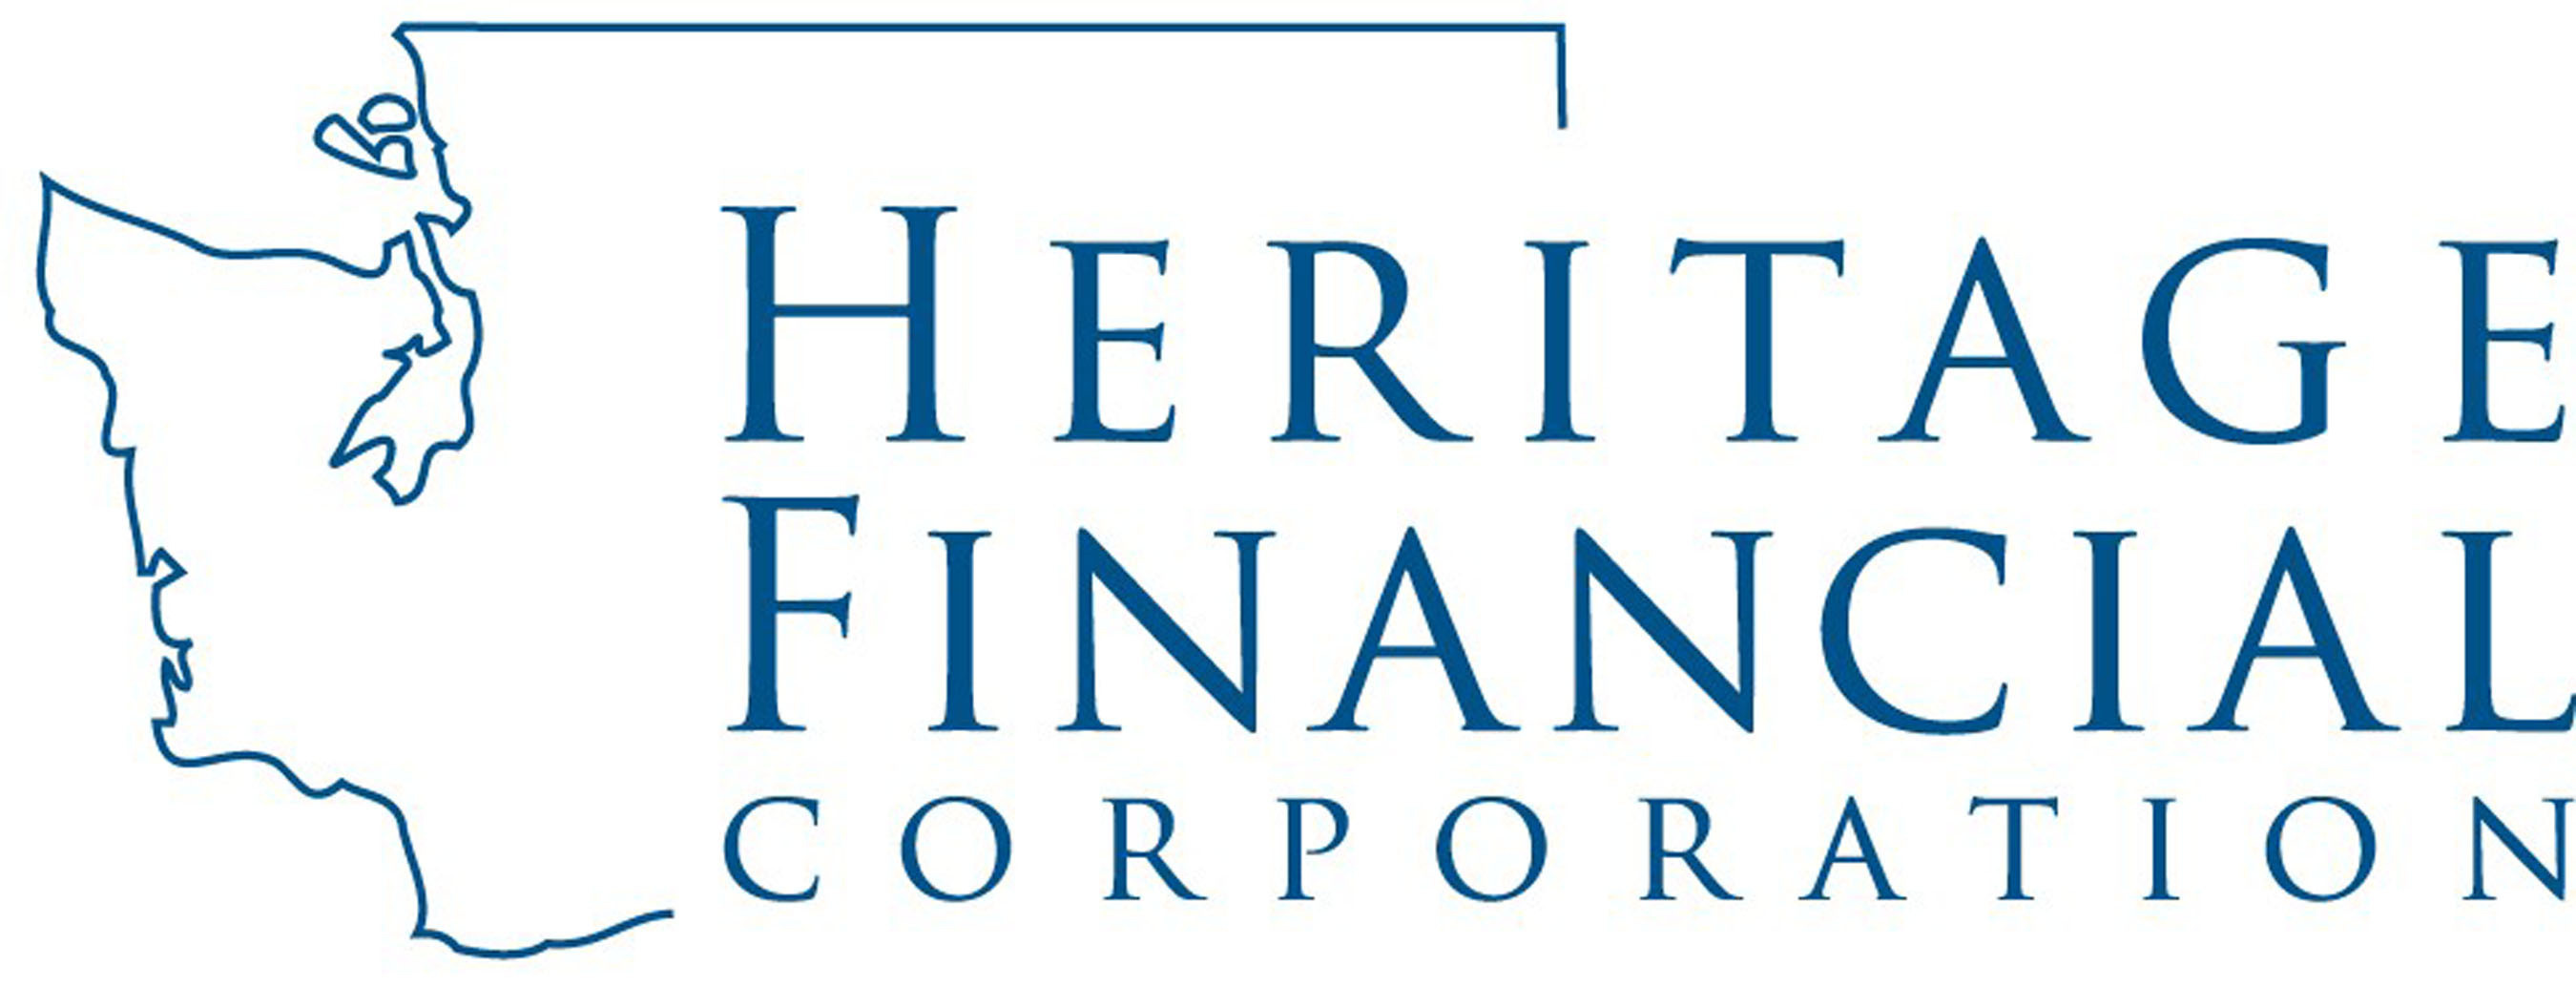 Heritage Financial Corporation logo